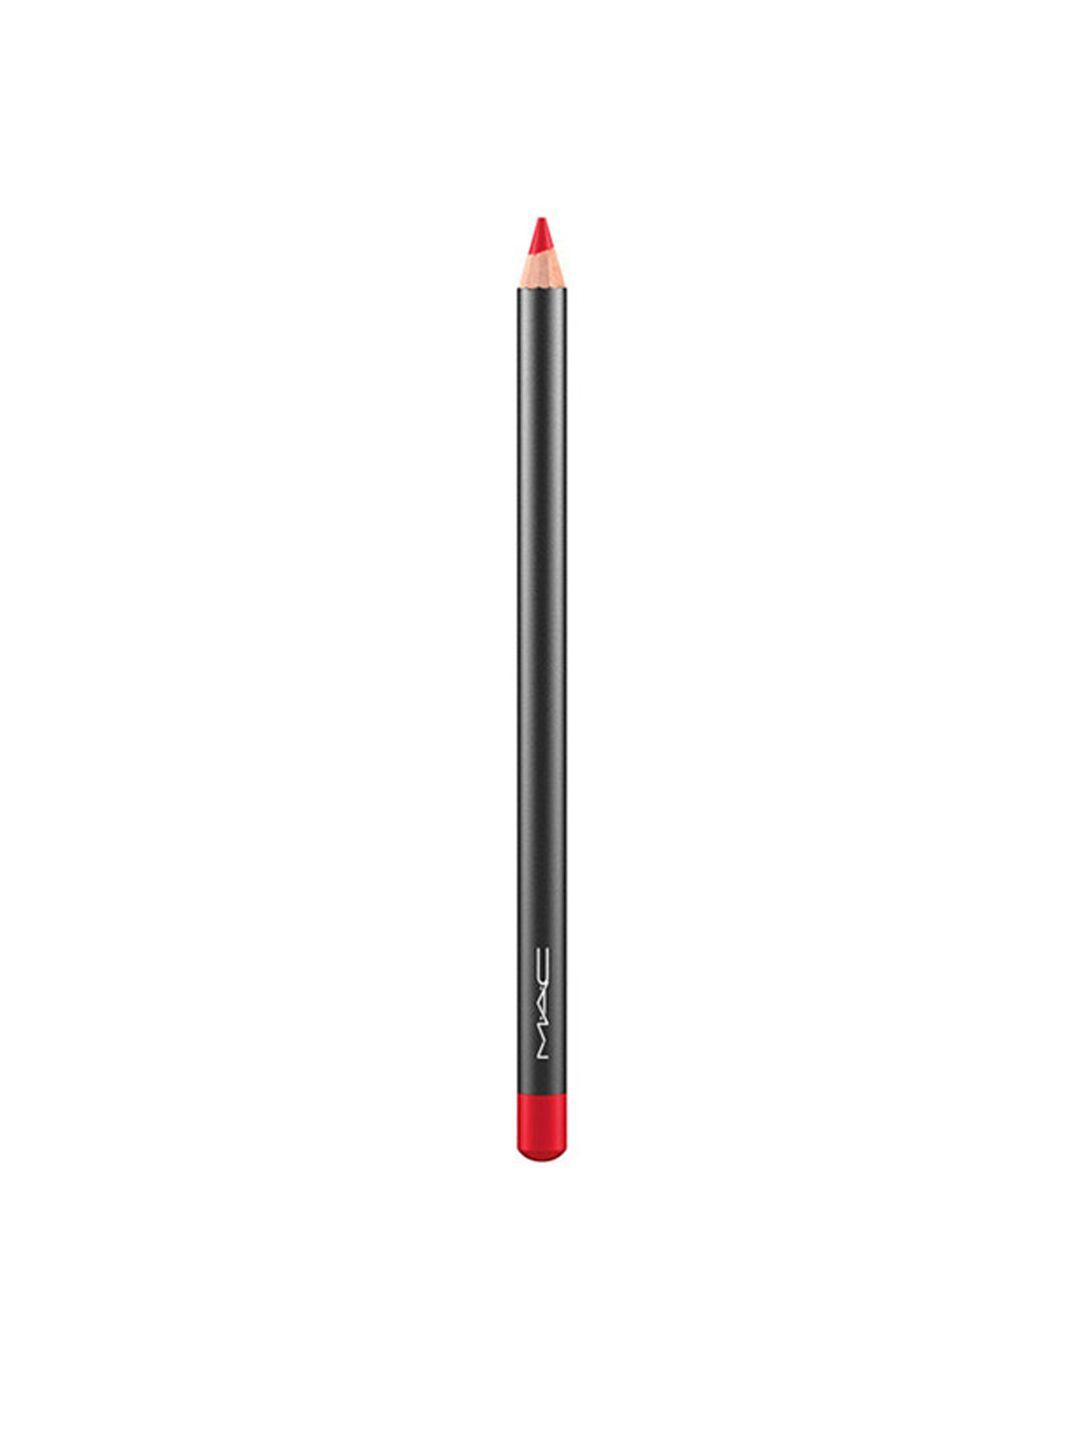 m.a.c ruby woo lip pencil